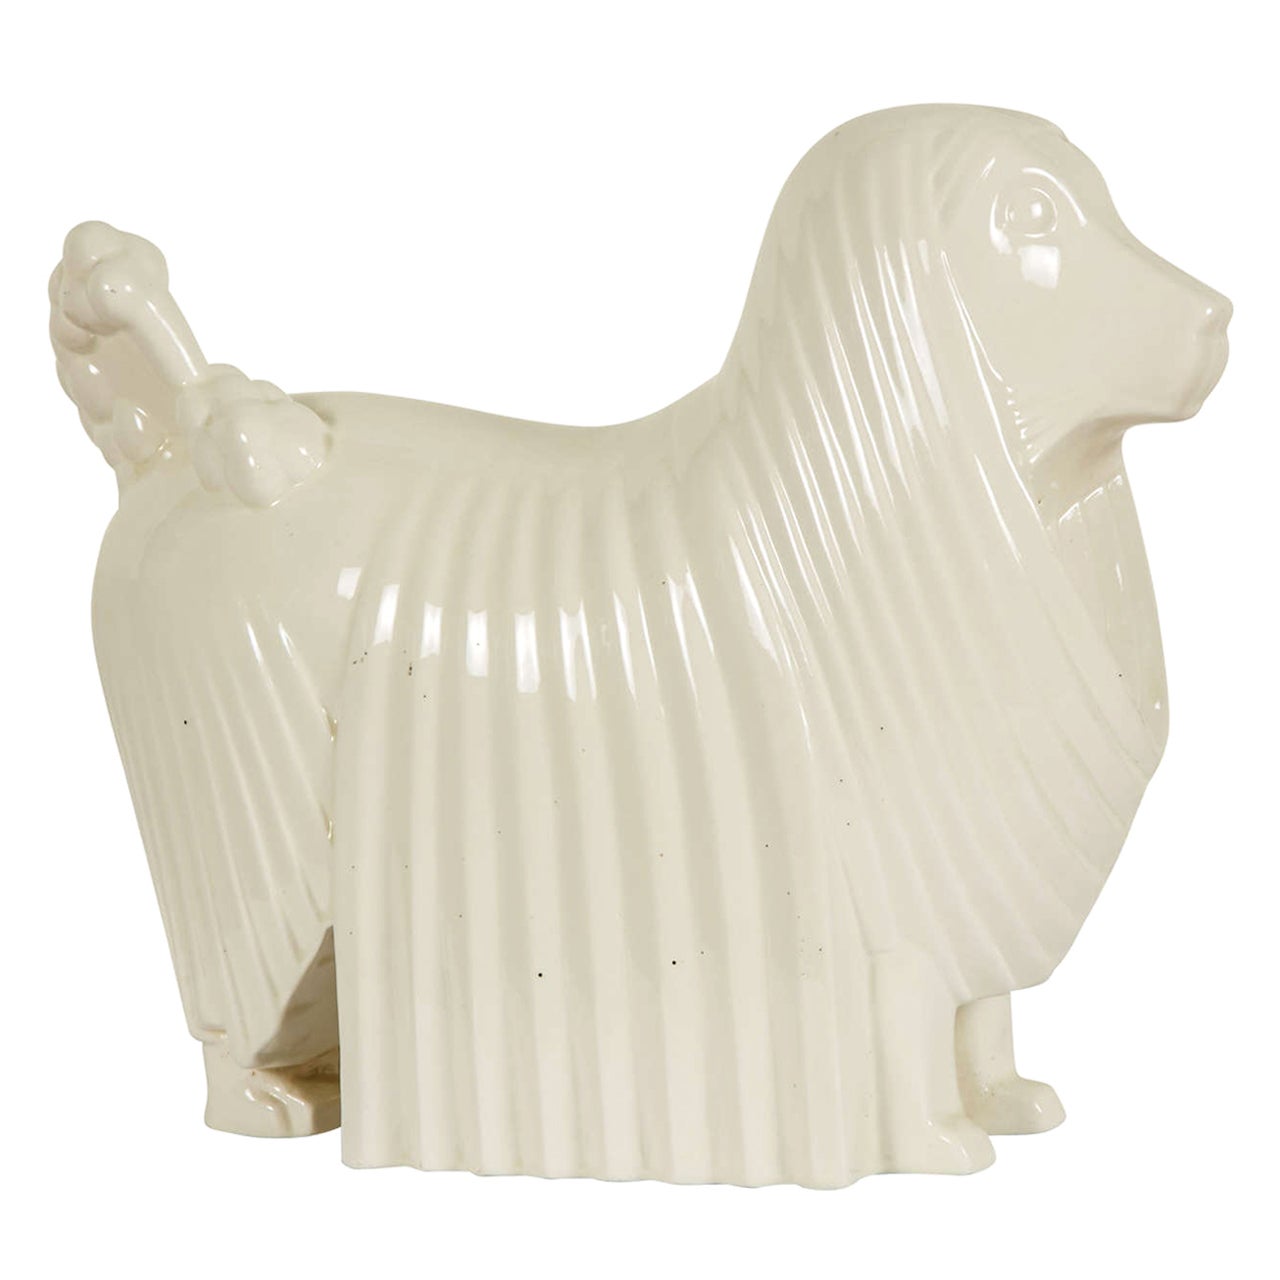 Ceramic Poodle by Adnet, France, Art Deco, circa 1930